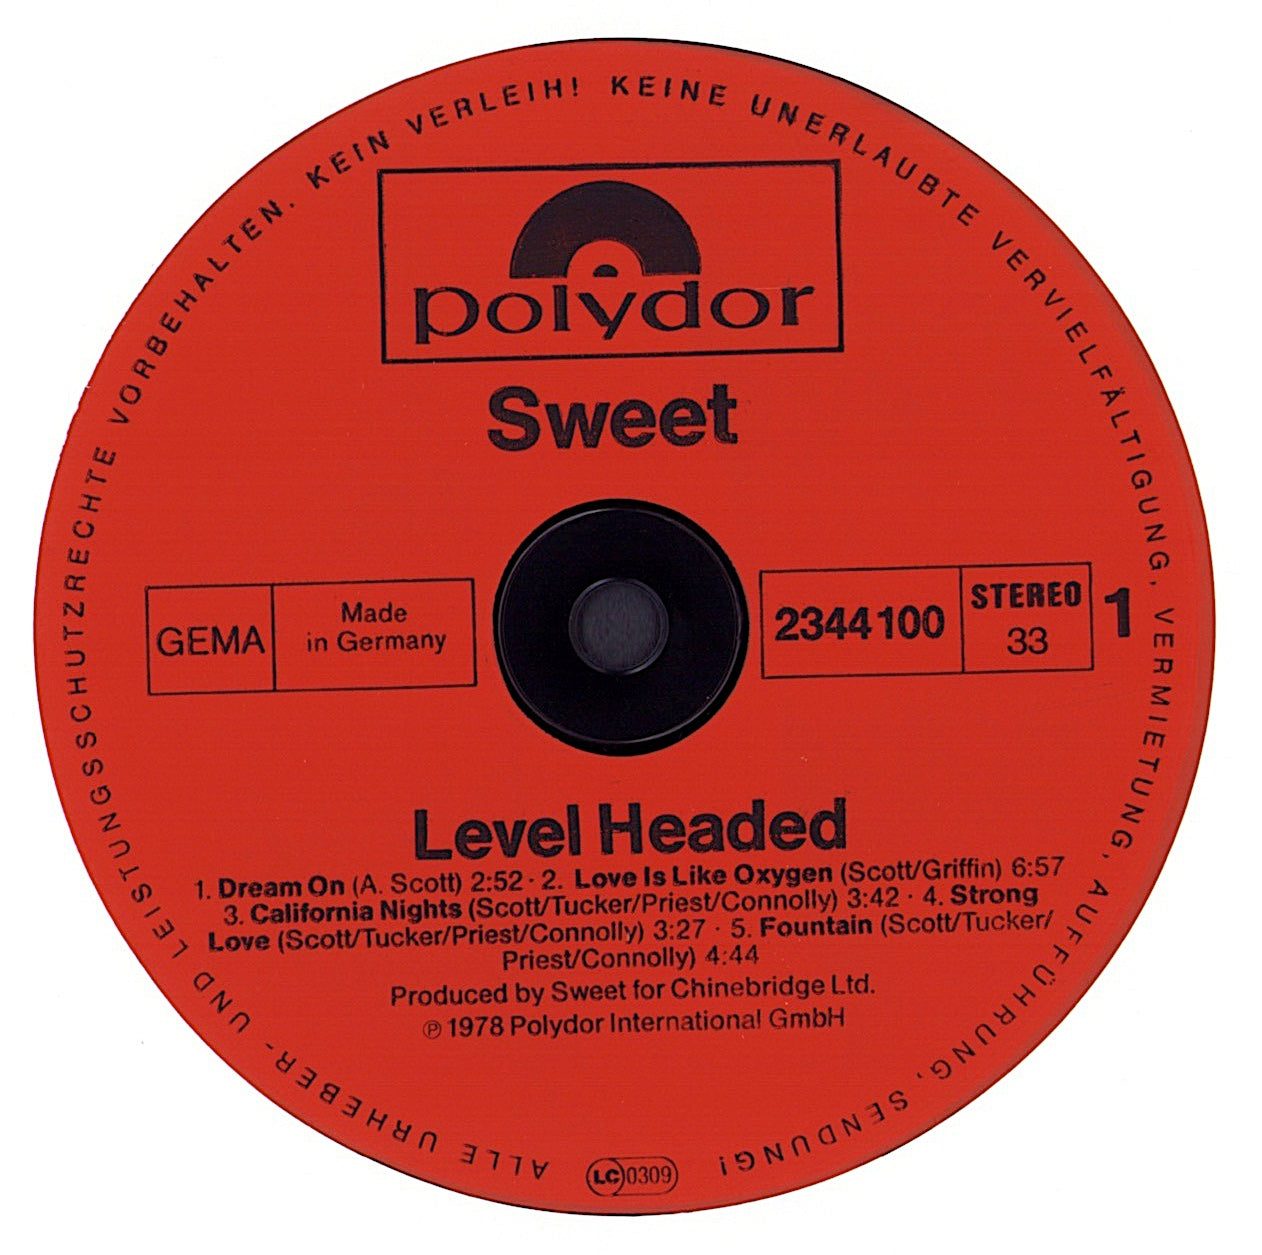 Sweet - Level Headed Vinyl LP